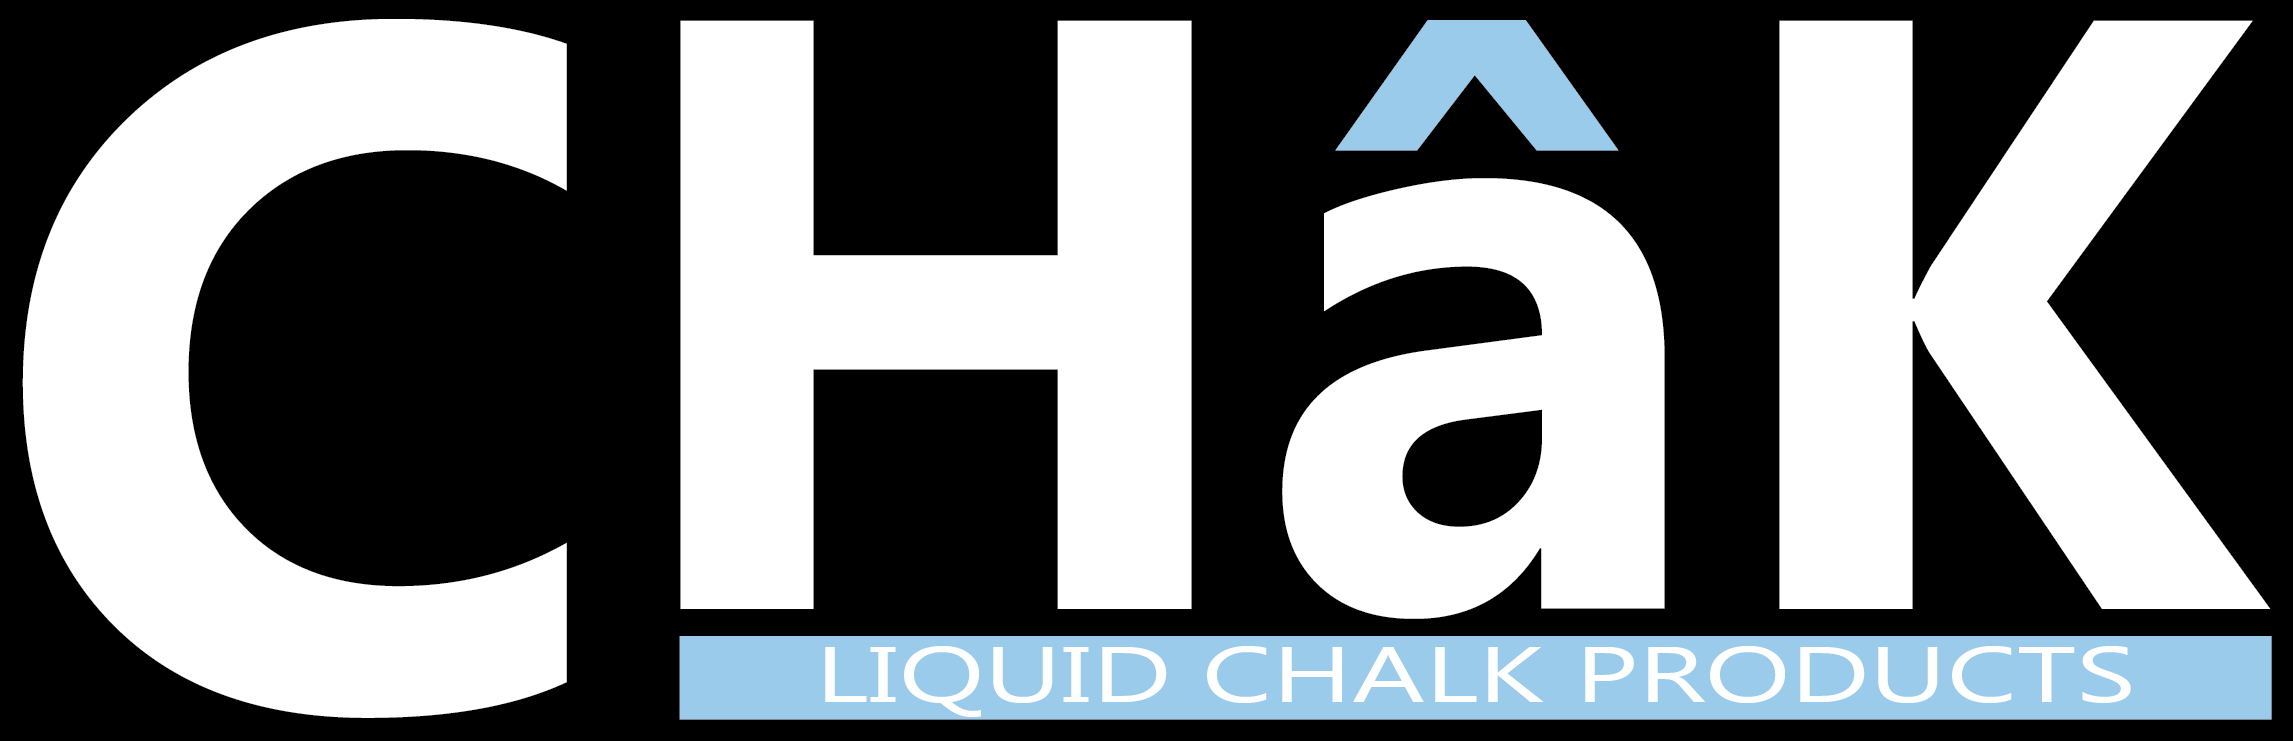 Chak Products Logo